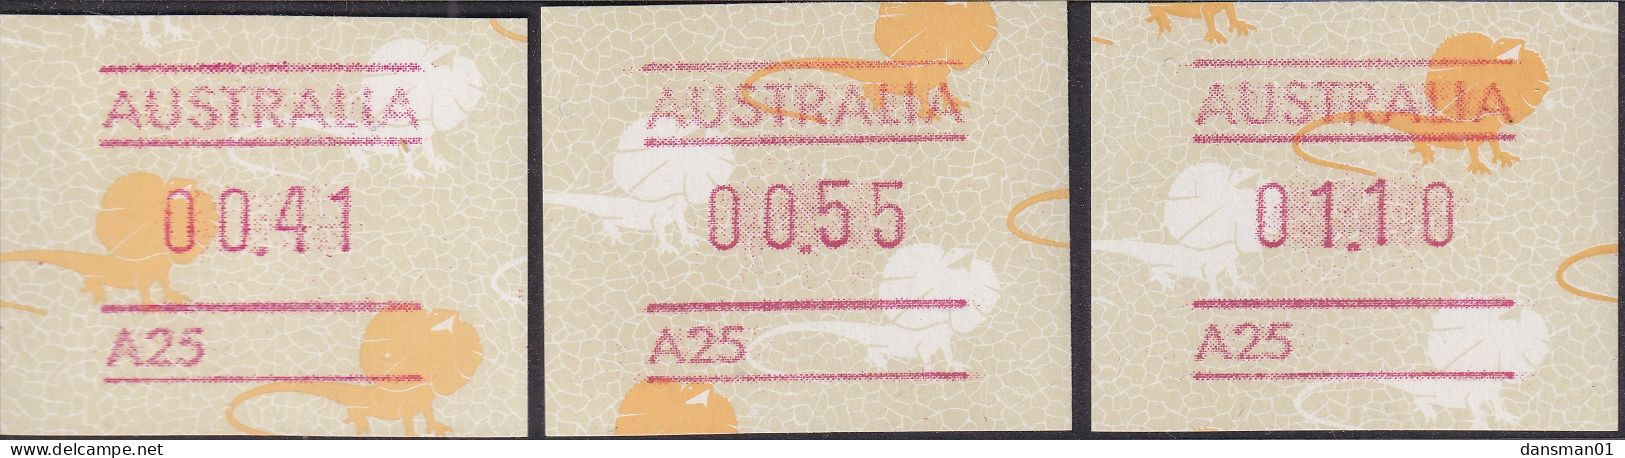 Australia 1989 Frama BUTTON SET A25 MNH - Nuevos